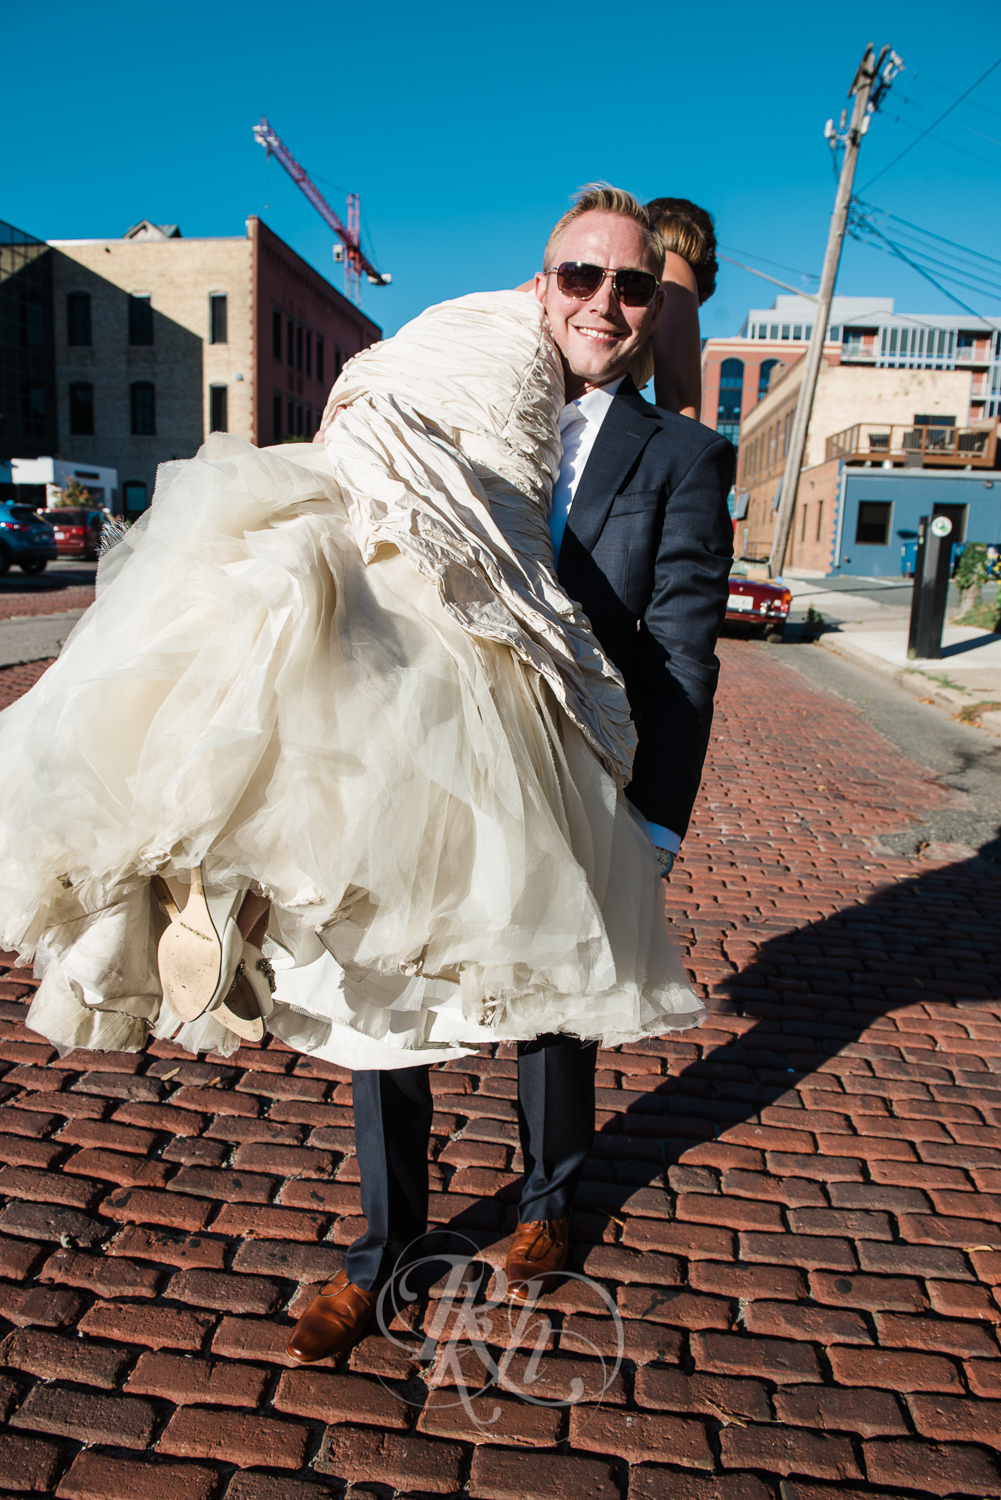  Minneapolis Wedding Photography - Becca & Justin - RKH Images-32 